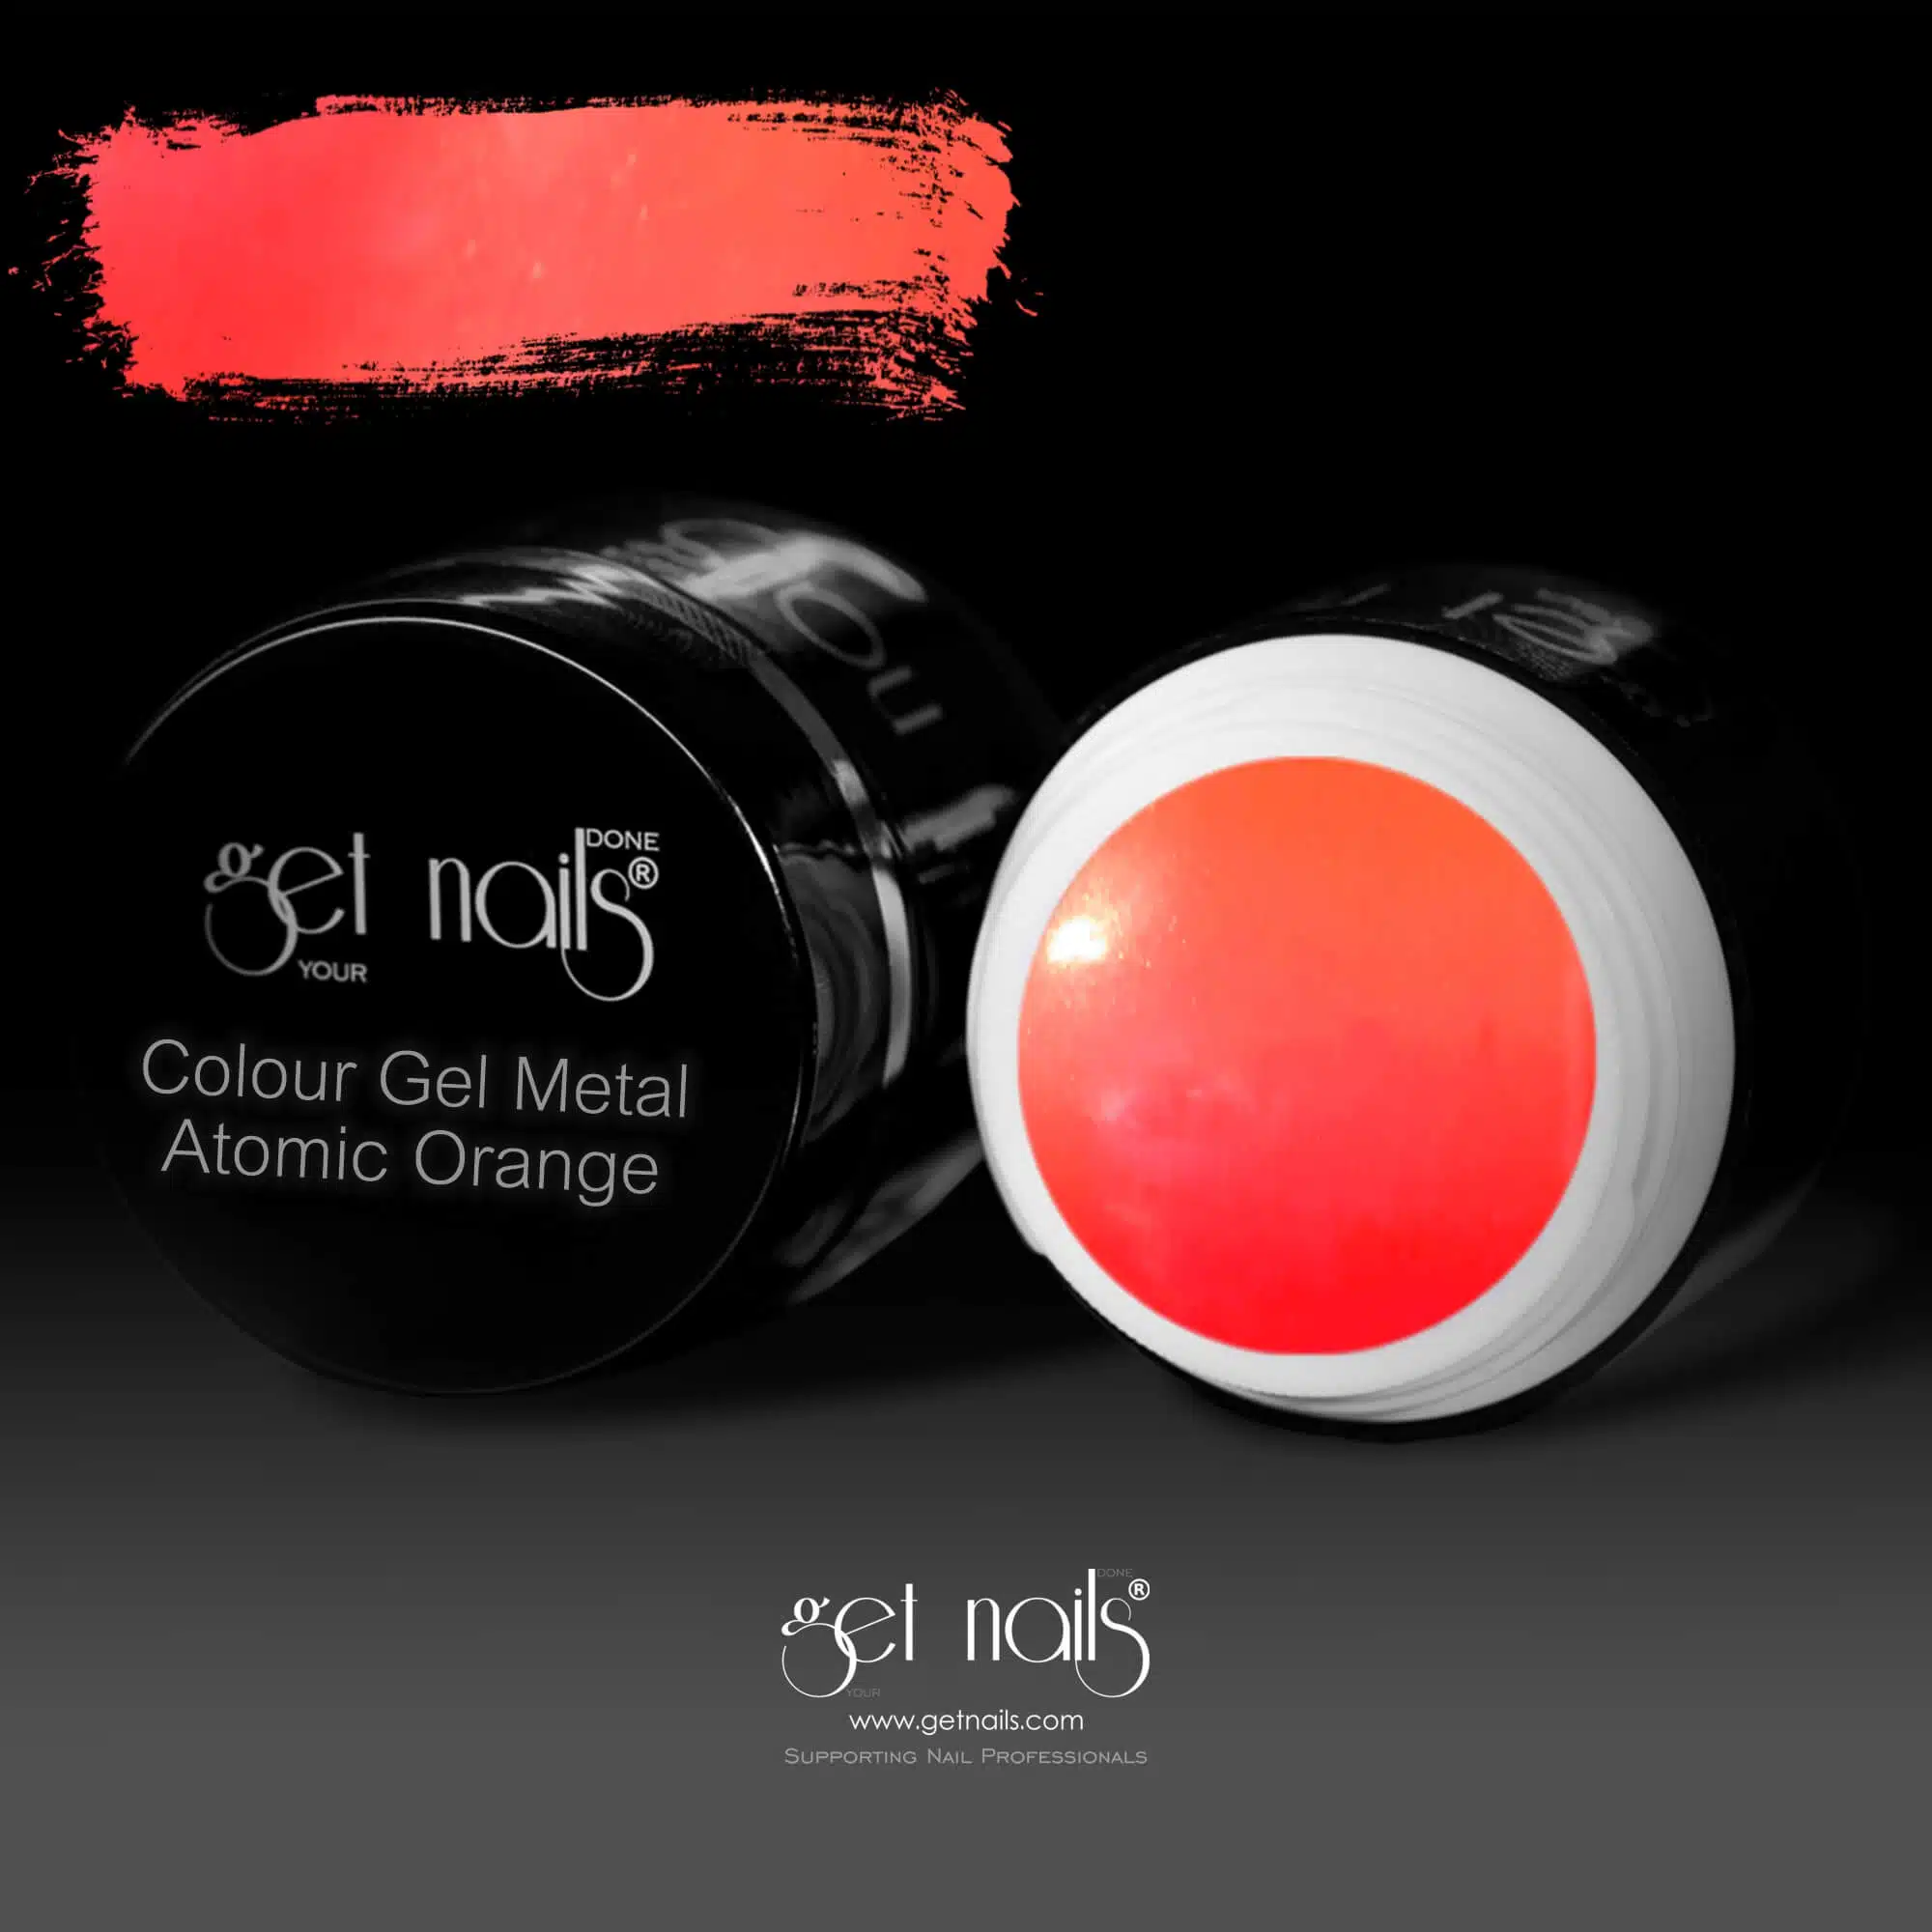 Get Nails Austria - Gel colorato metal Atomic Orange 5g